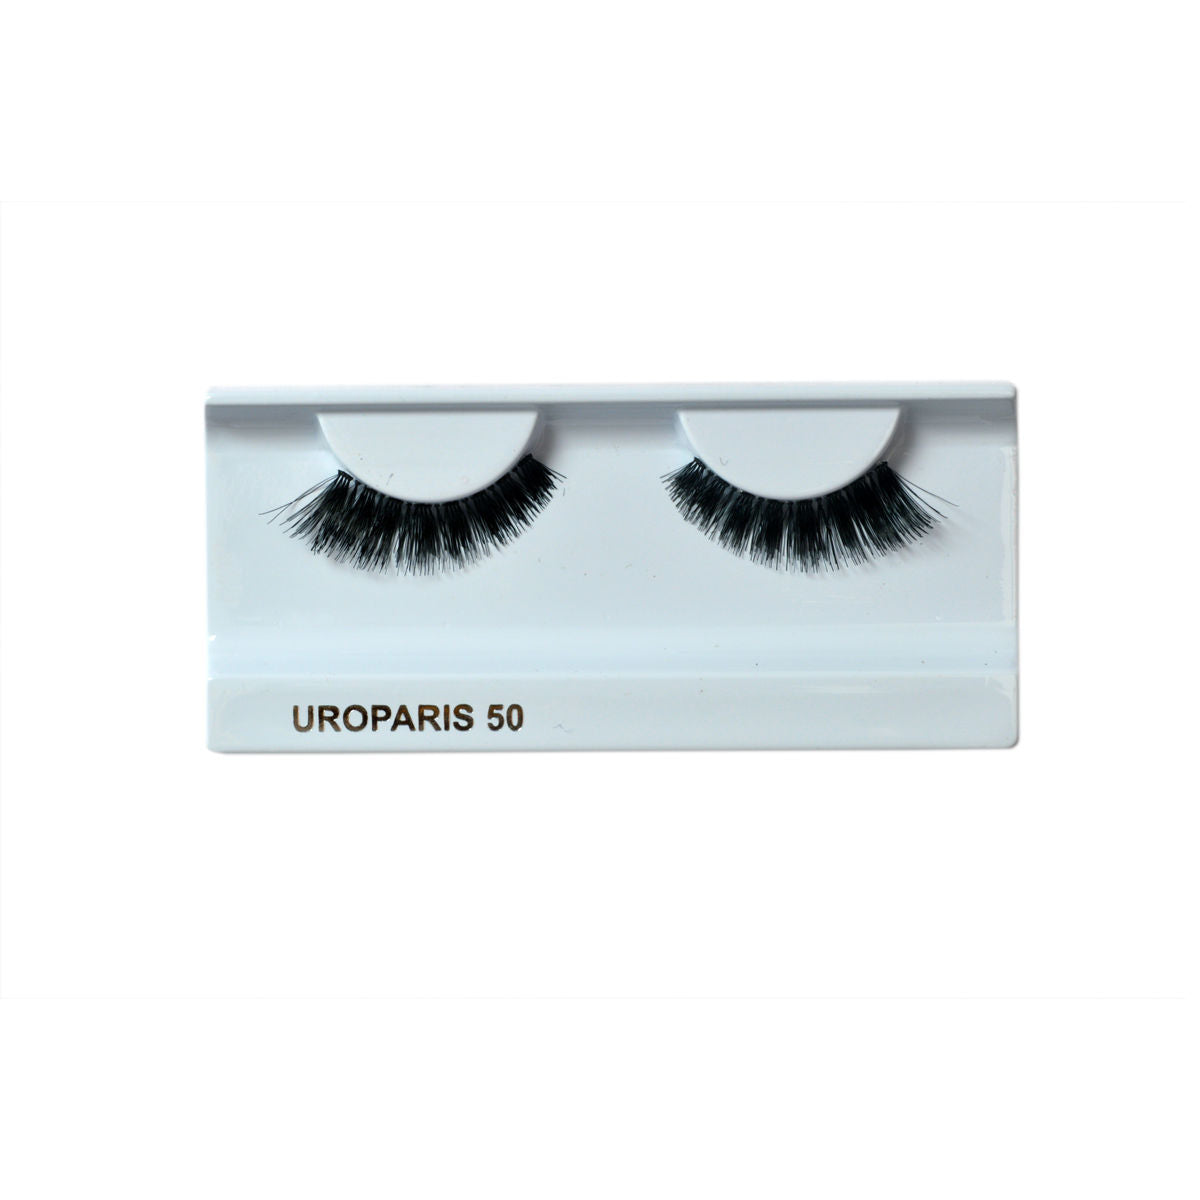 Uroparis Eyelashes 50 Black (1 pair) Uroparis